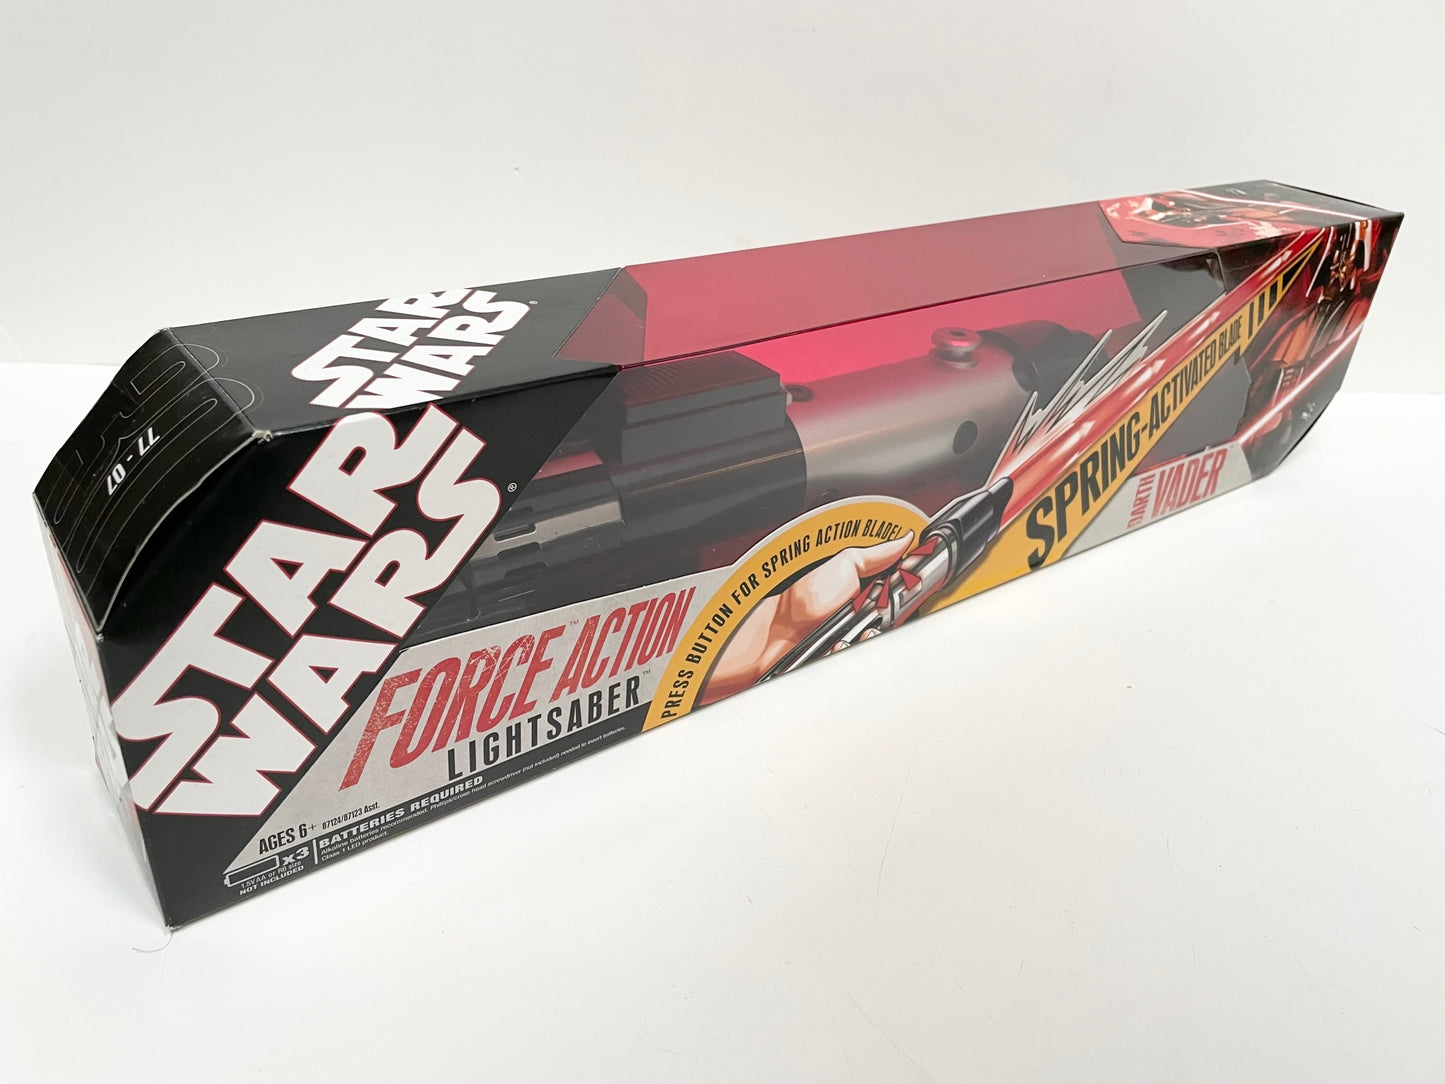 30th Anniversary Darth Vader Electronic Lightsaber, Hasbro 2007